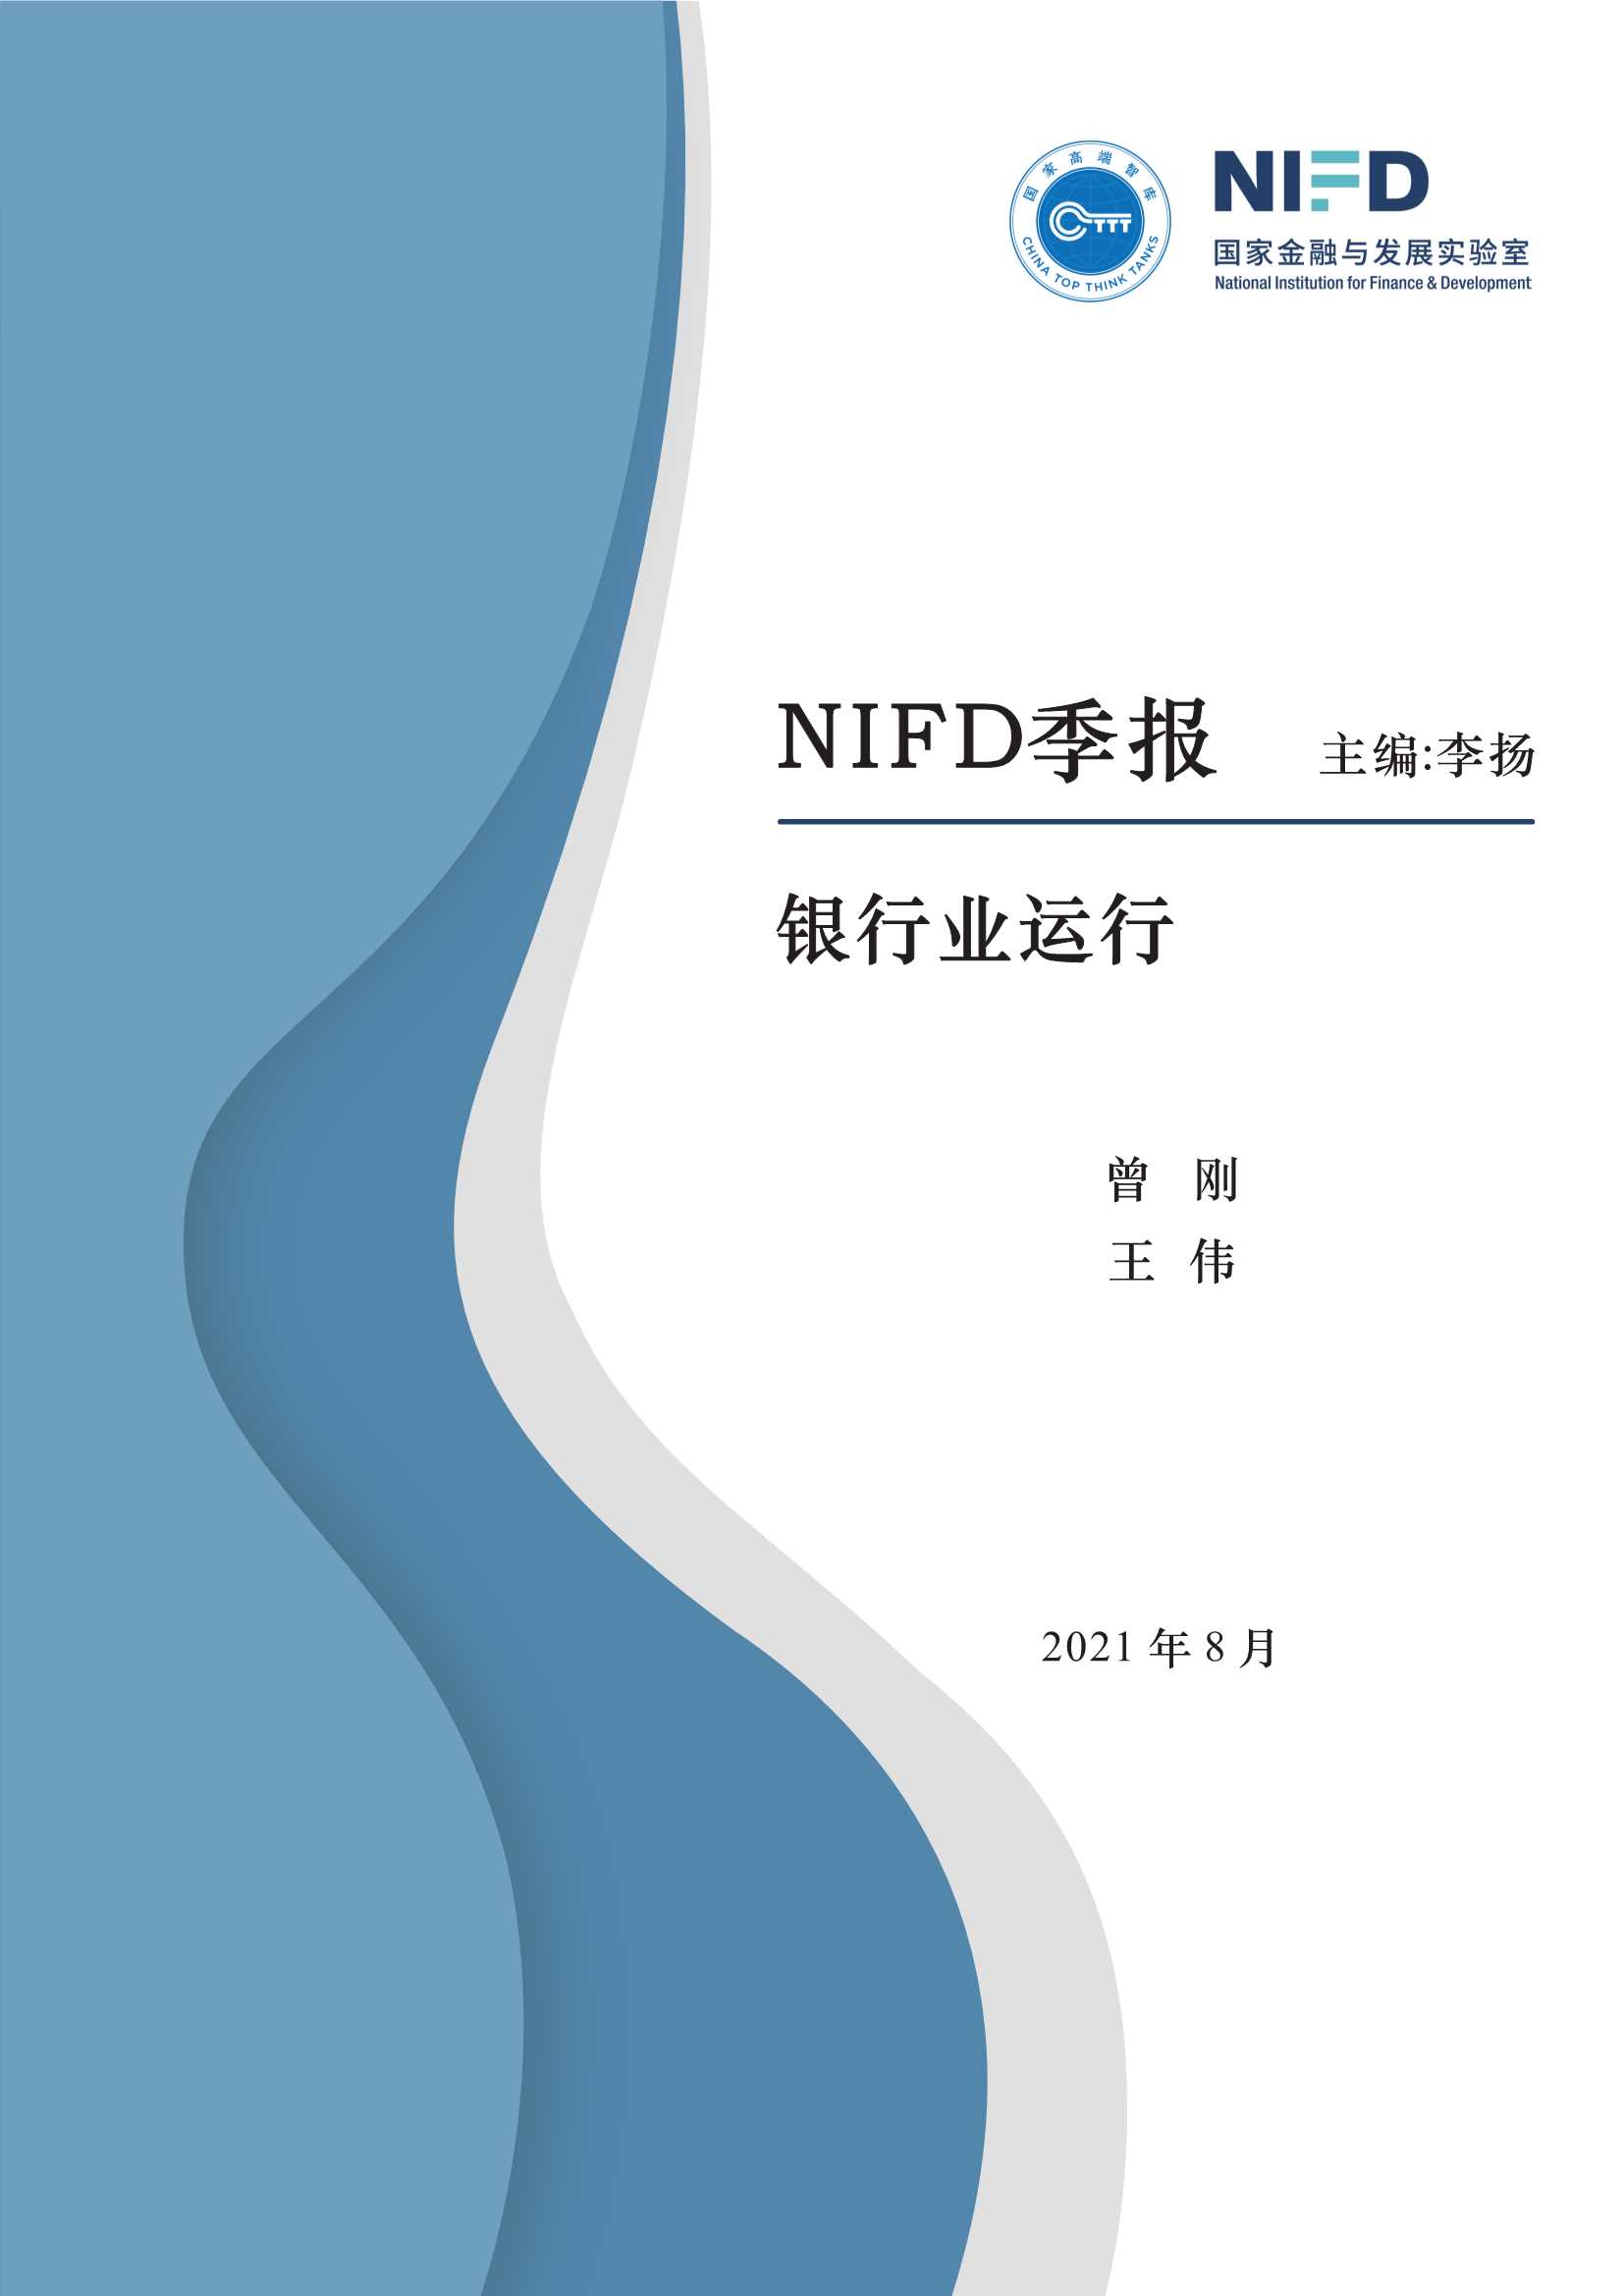 NIFD-2021Q2银行业运行-2021.08-16页